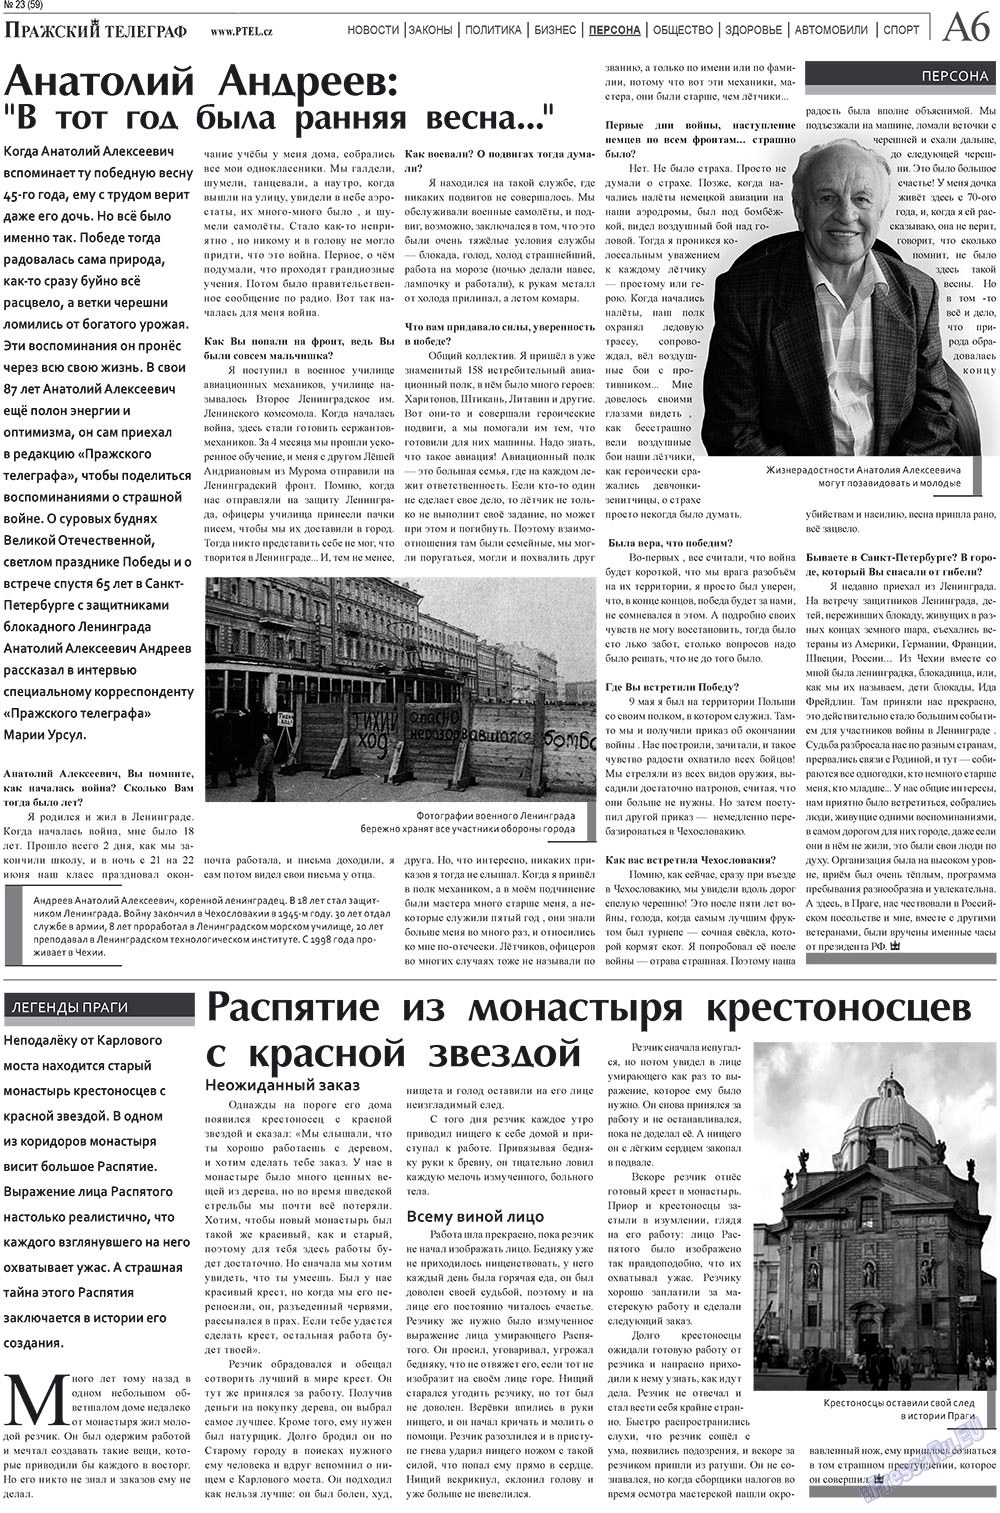 Пражский телеграф, газета. 2010 №23 стр.6